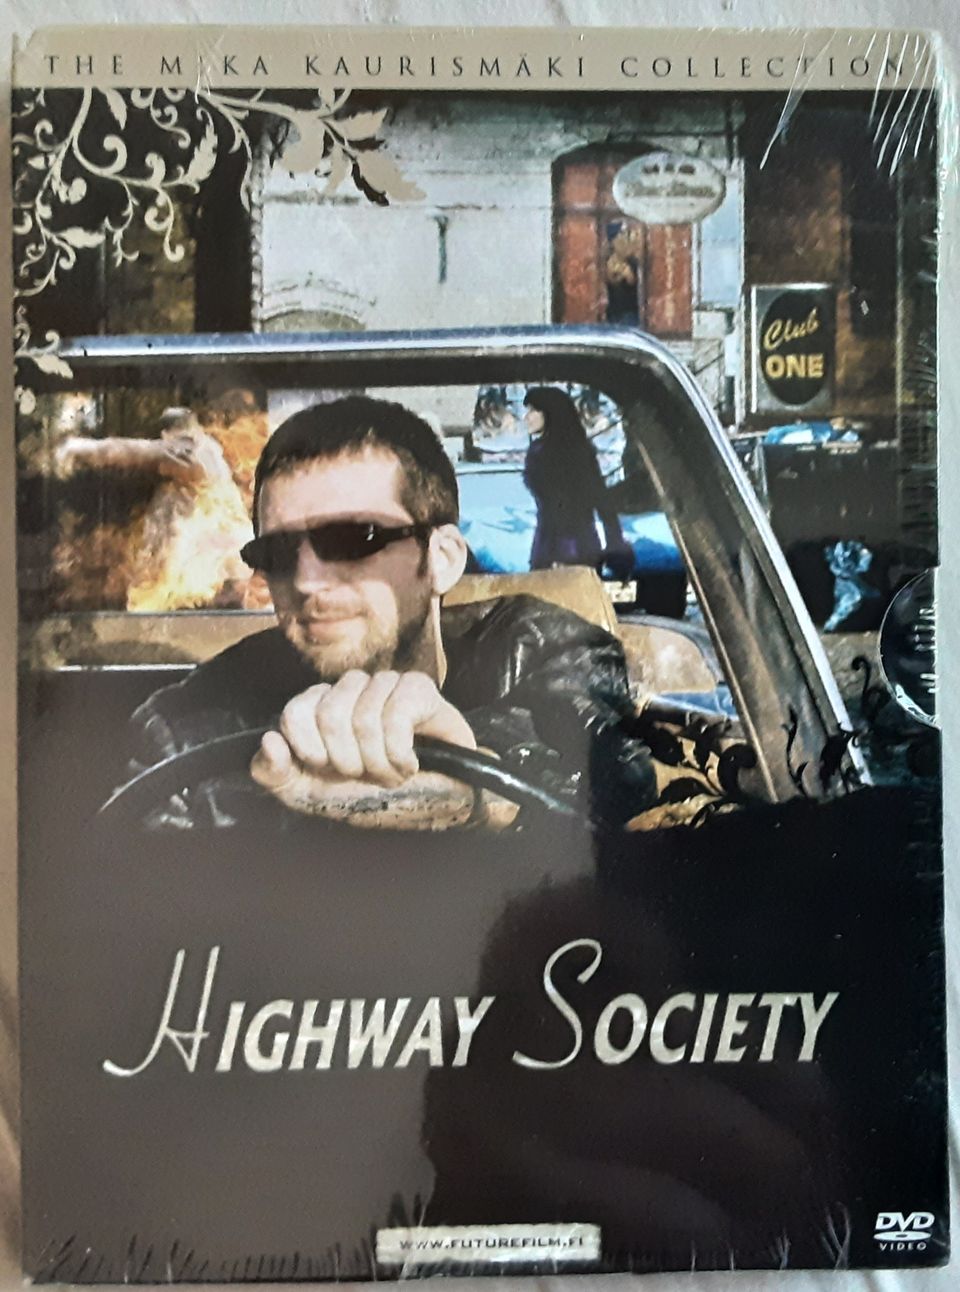 Highway Society, 2000 (DVD) Mika Kaurismäki